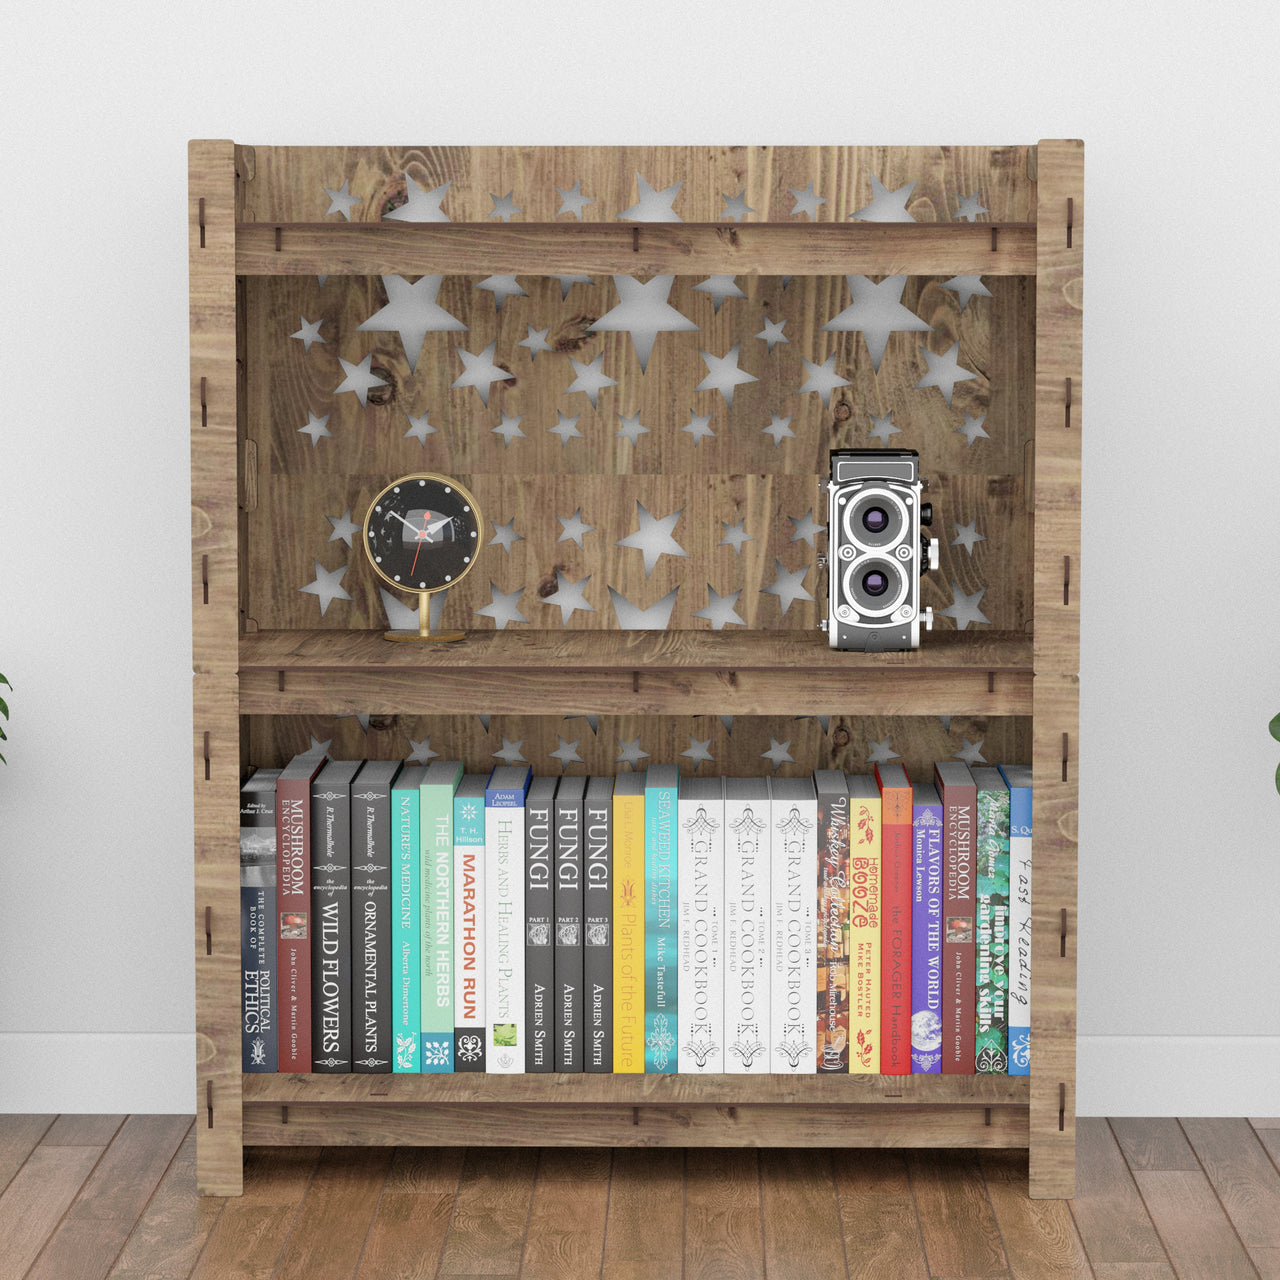 Stars LUX 3-tier Bookshelf Bookcase Shelving Unit